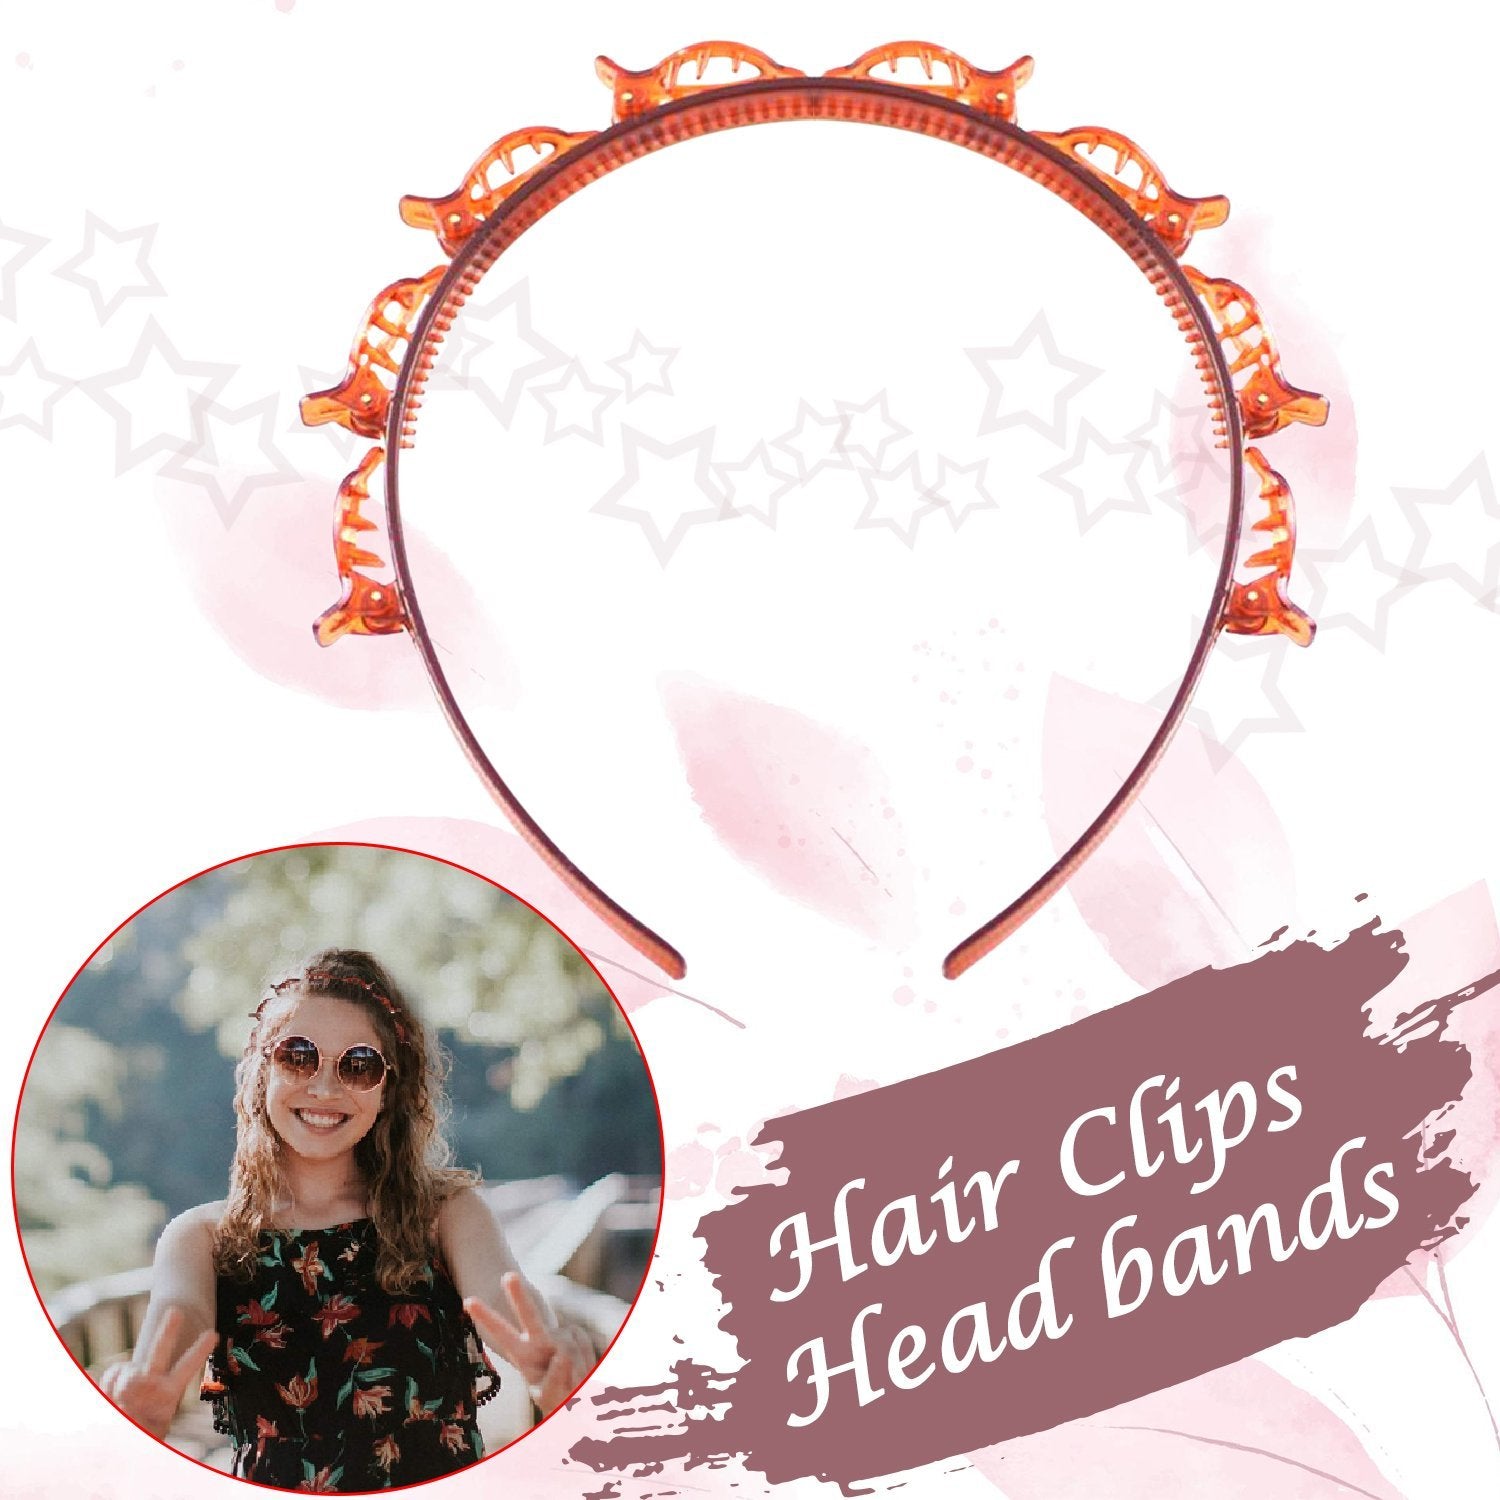 1479 Hair Twister, Hairstyle Braid Tool, Hair Clips Headbands